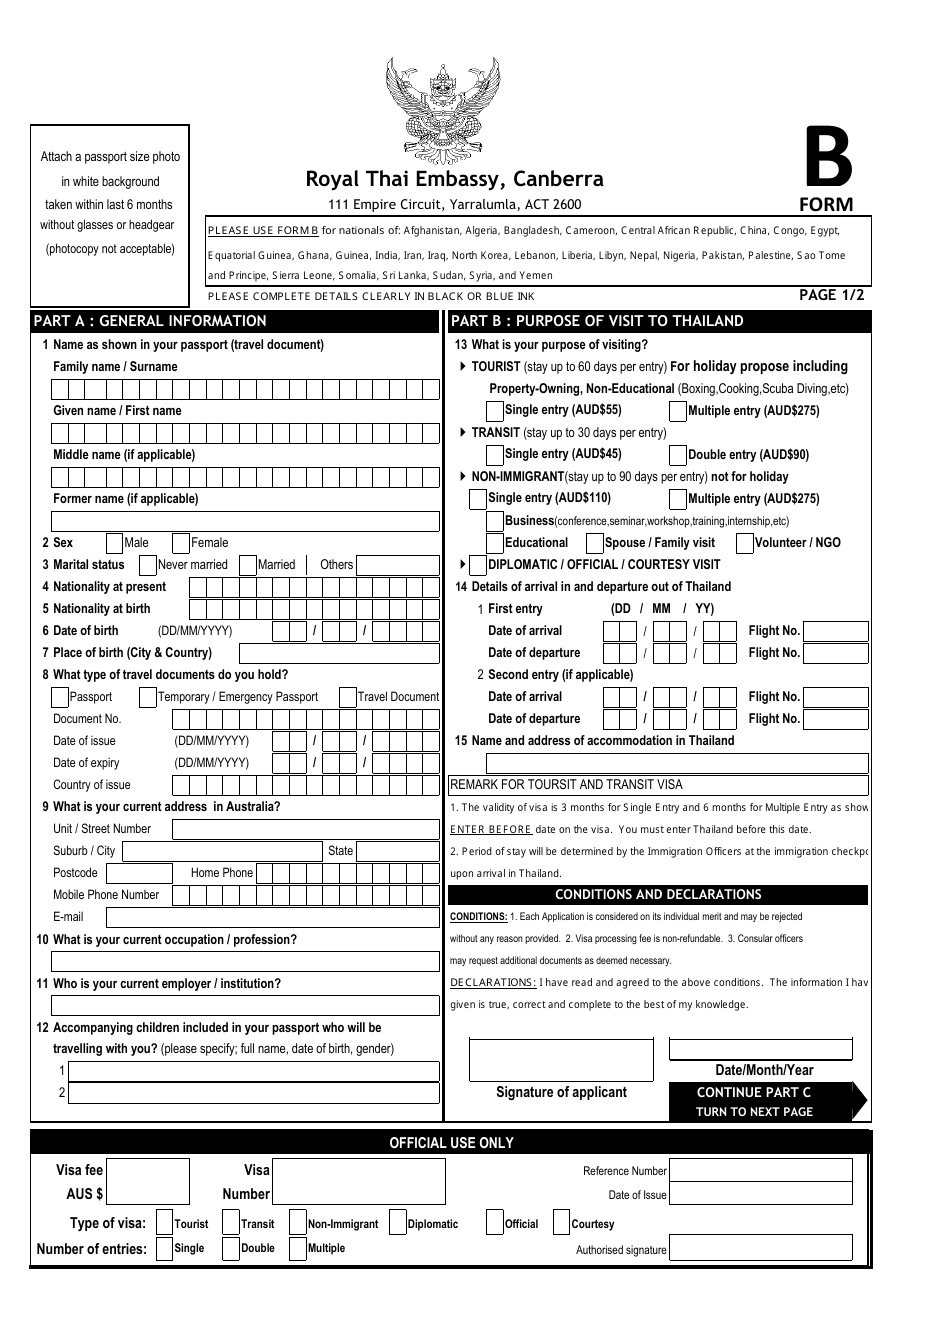 Form B Thai Visa Application Form - Royal Thai Embassy - Canberra, Australia, Page 1